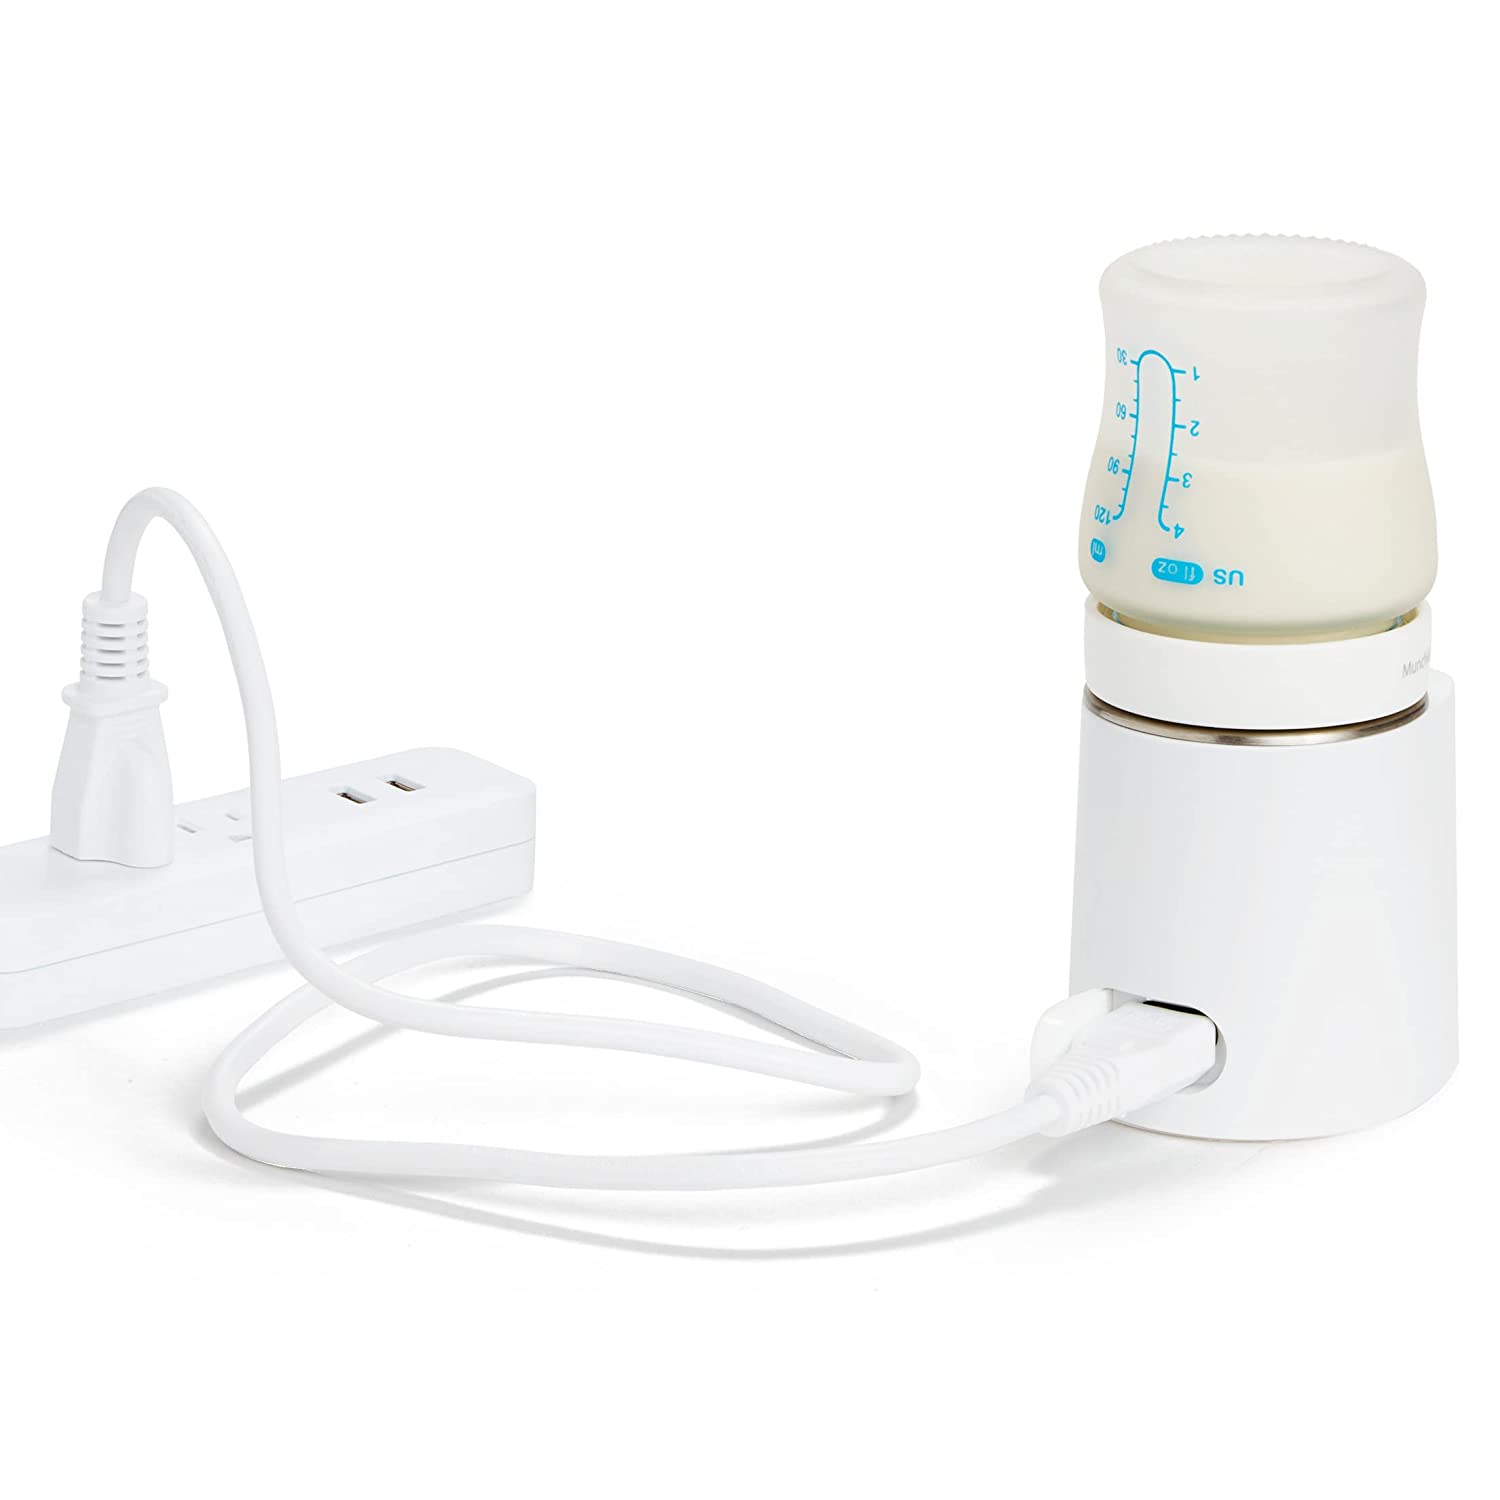 Munchkin 98° Digital Bottle Warmer and Adapter for Playtex